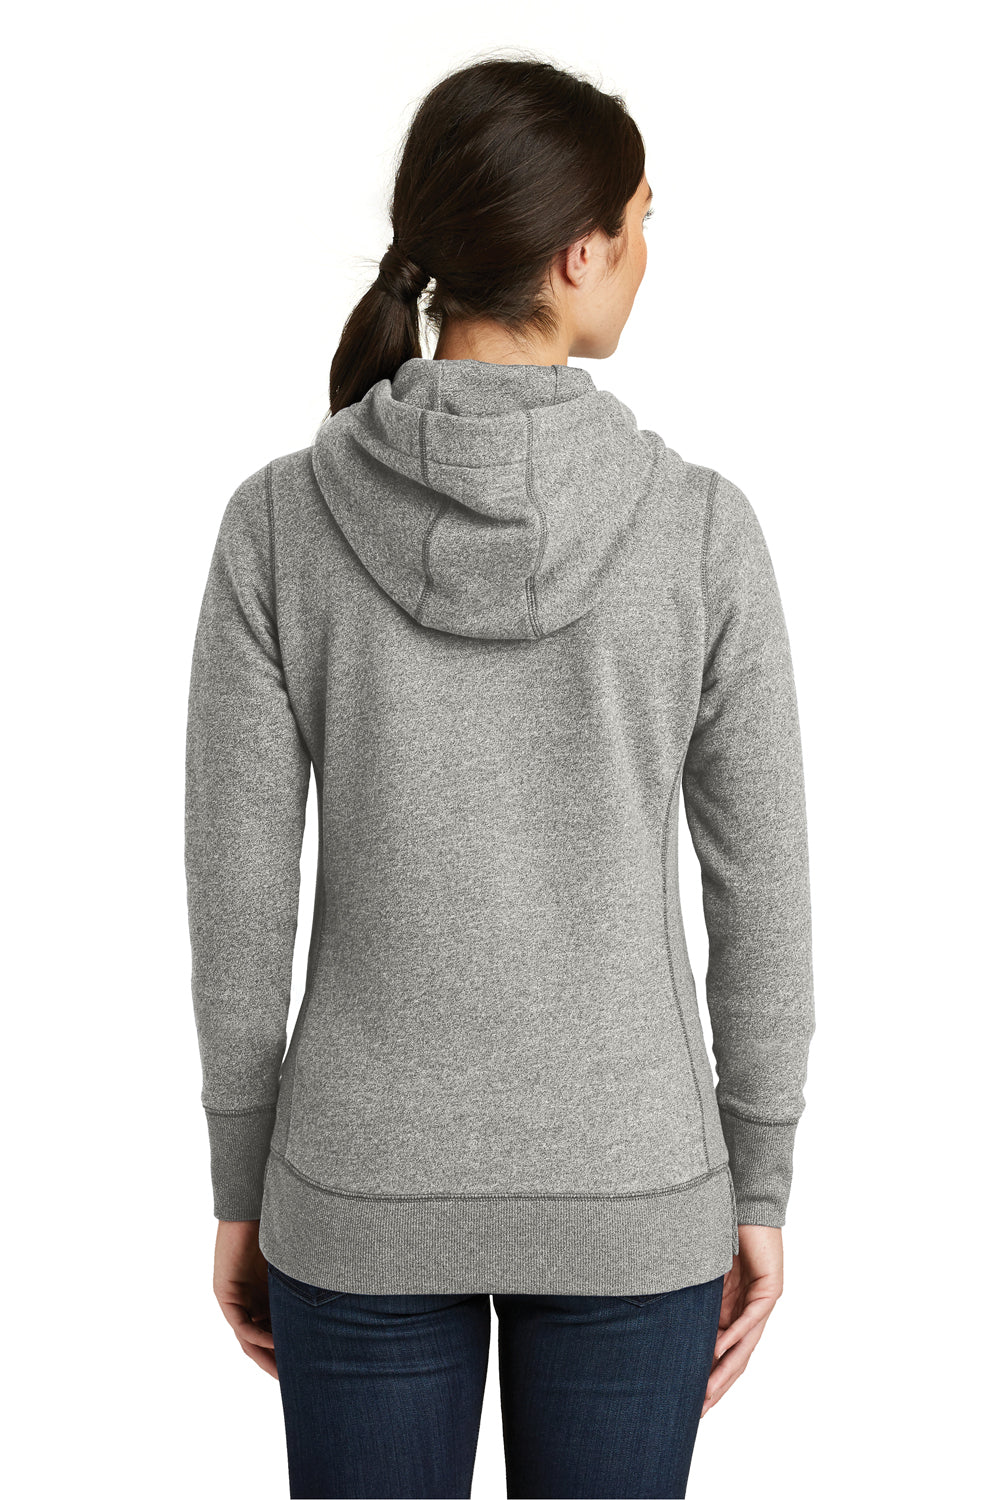 New Era LNEA502 Womens Sueded French Terry Full Zip Hooded Sweatshirt Hoodie Light Graphite Grey Twist Back